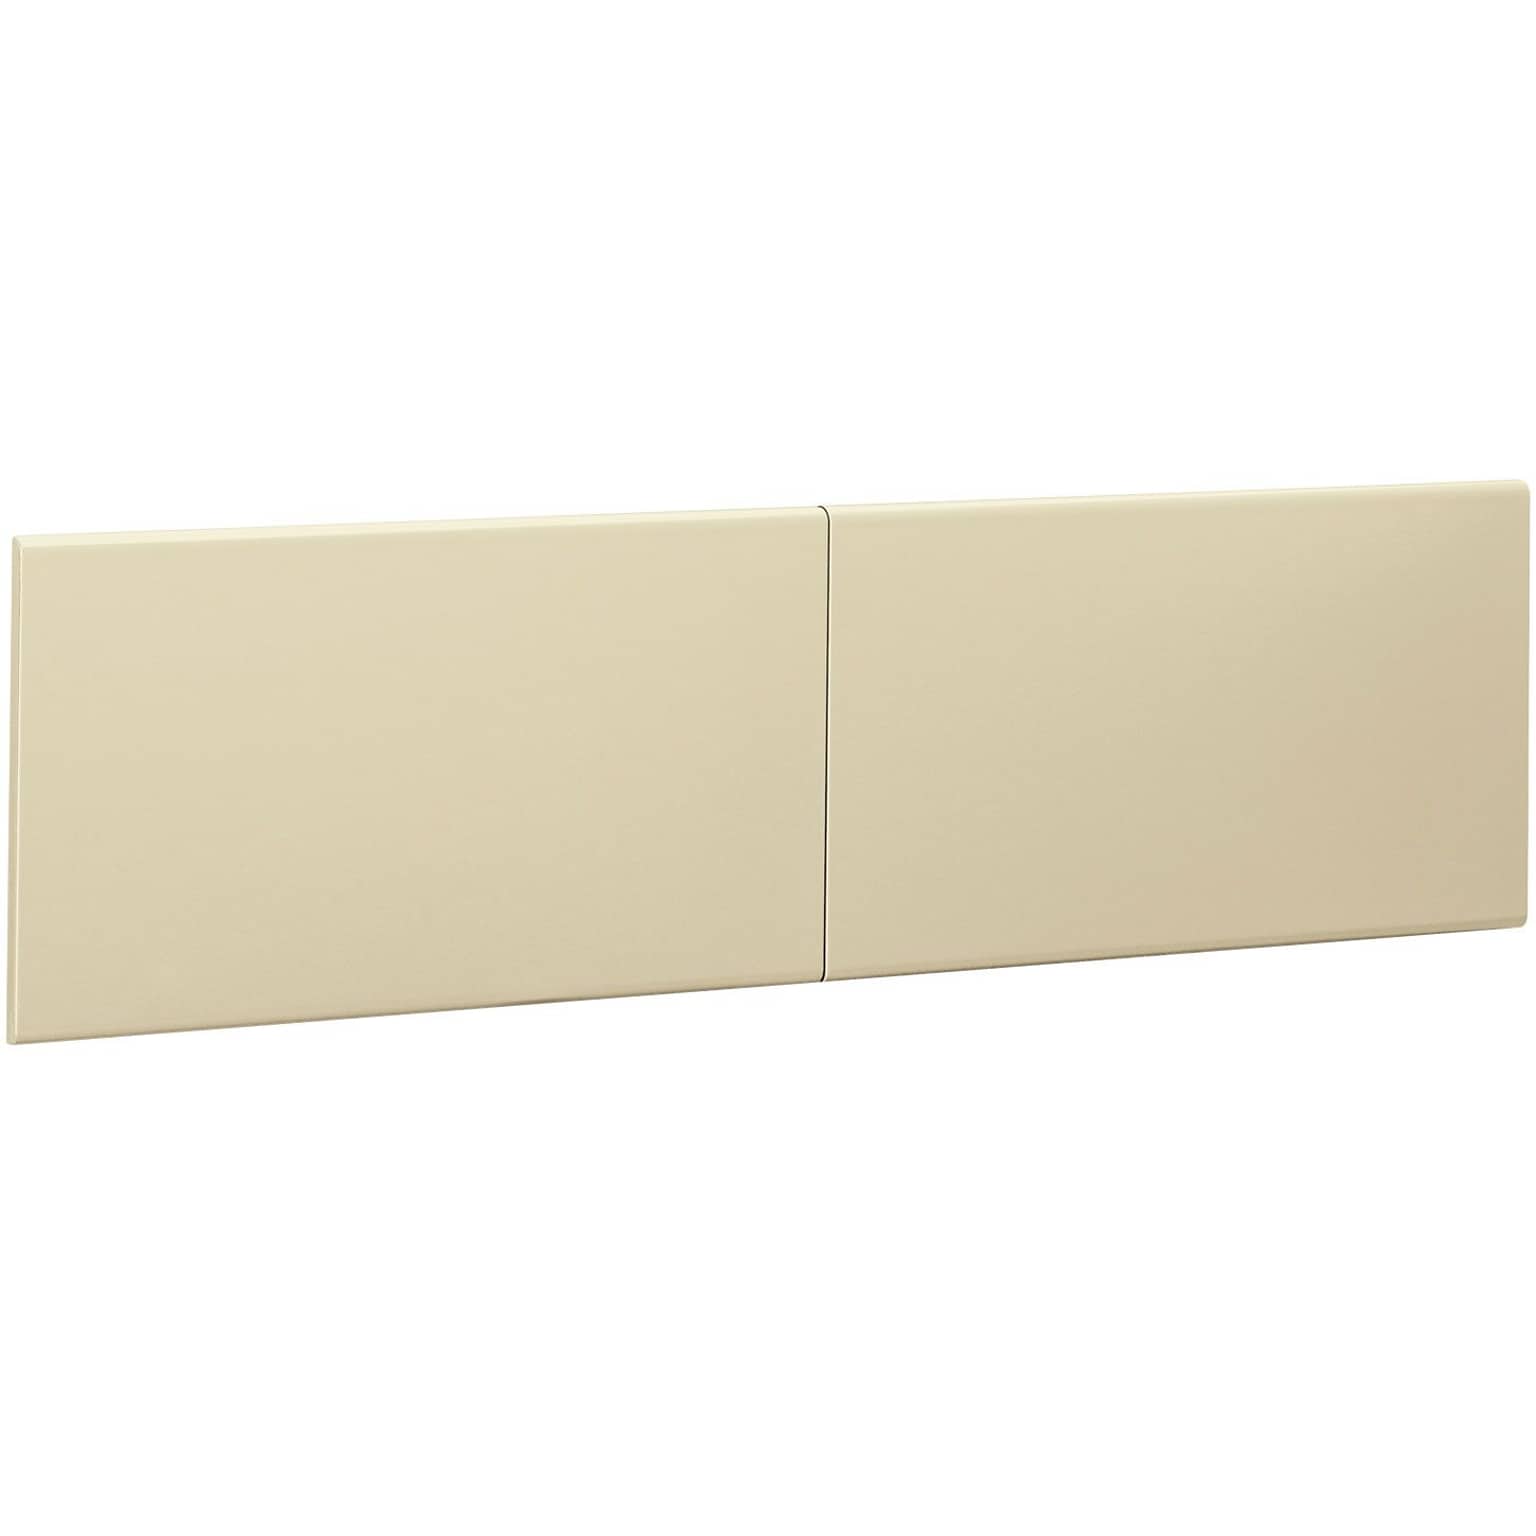 HON® 38000 Series Hutch Flipper Doors For 60w Open Shelf, 30w x 15h, Putty (HON386015LL)